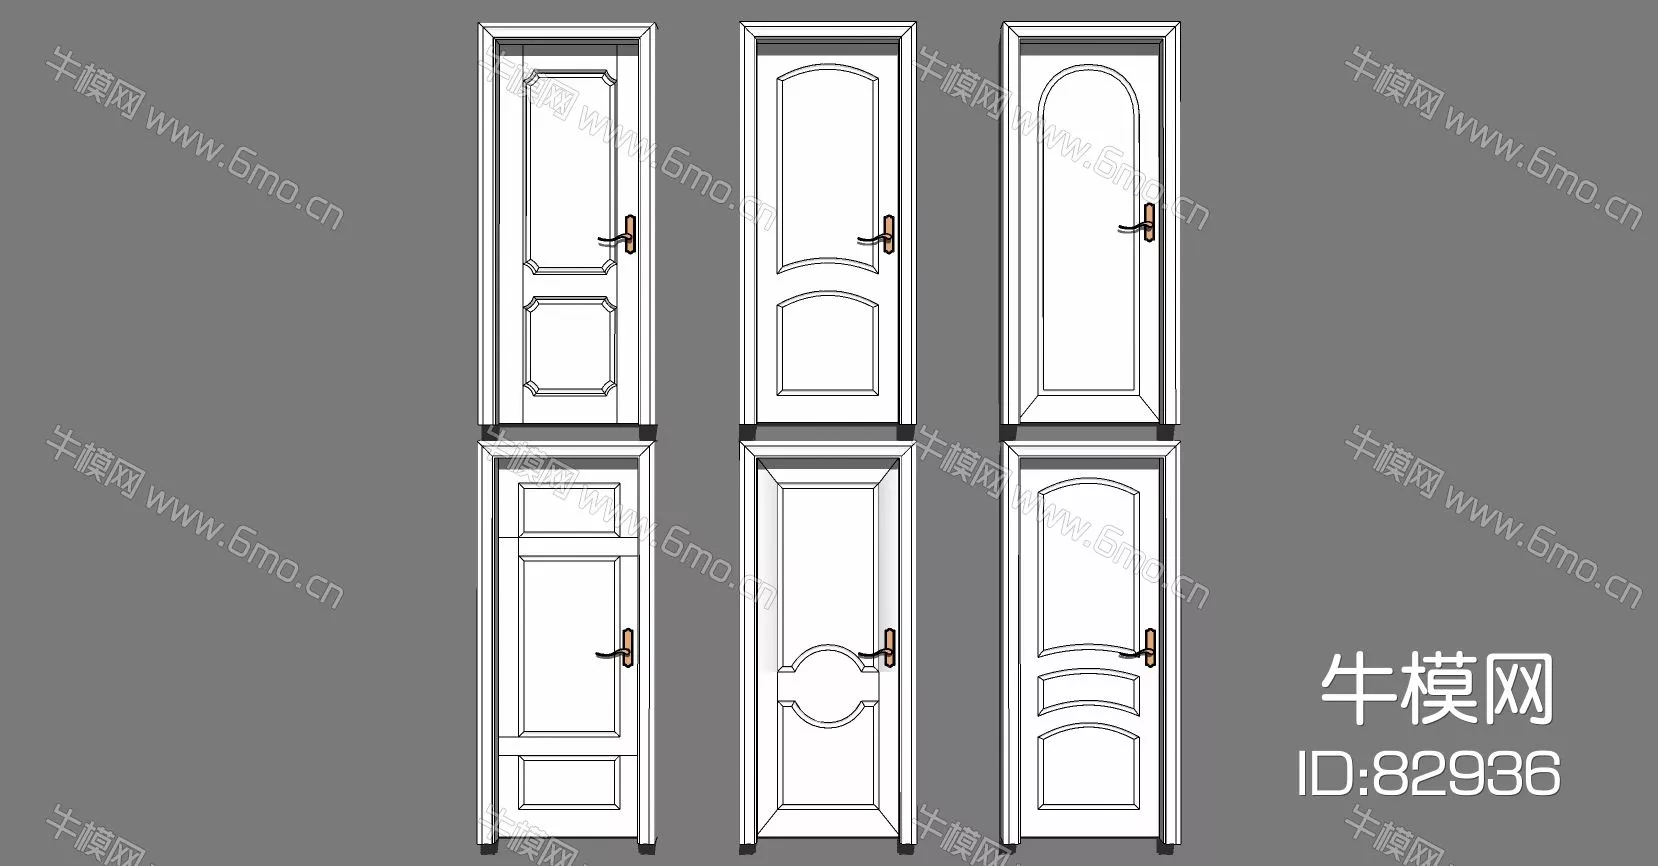 MODERN DOOR AND WINDOWS - SKETCHUP 3D MODEL - ENSCAPE - 82936